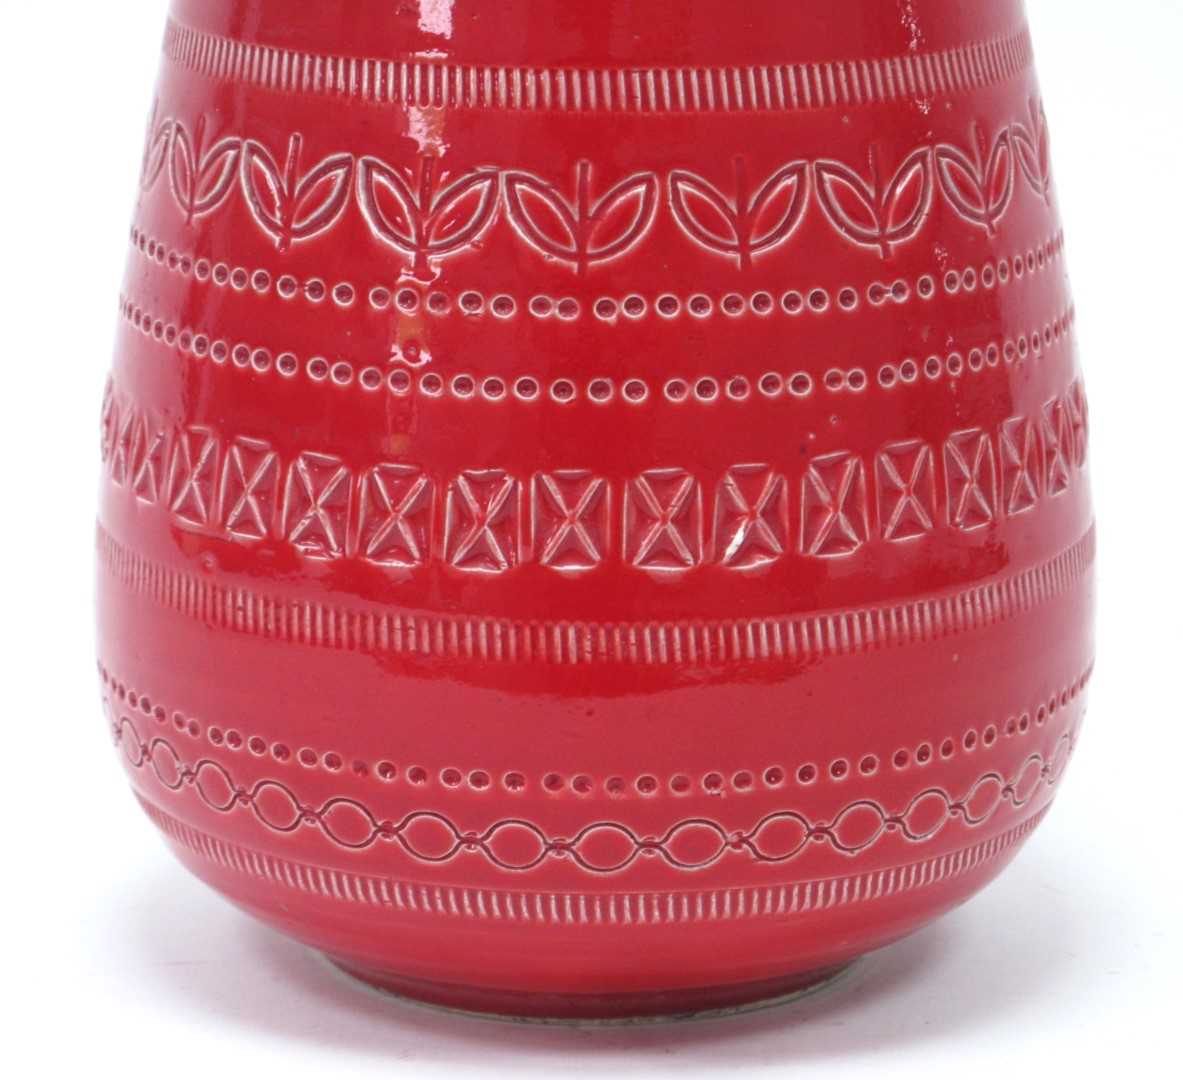 Aldo Londi for Bitossi Rimini Red Italian conical Vase, with incised decoration (impressed mark on - Image 3 of 3